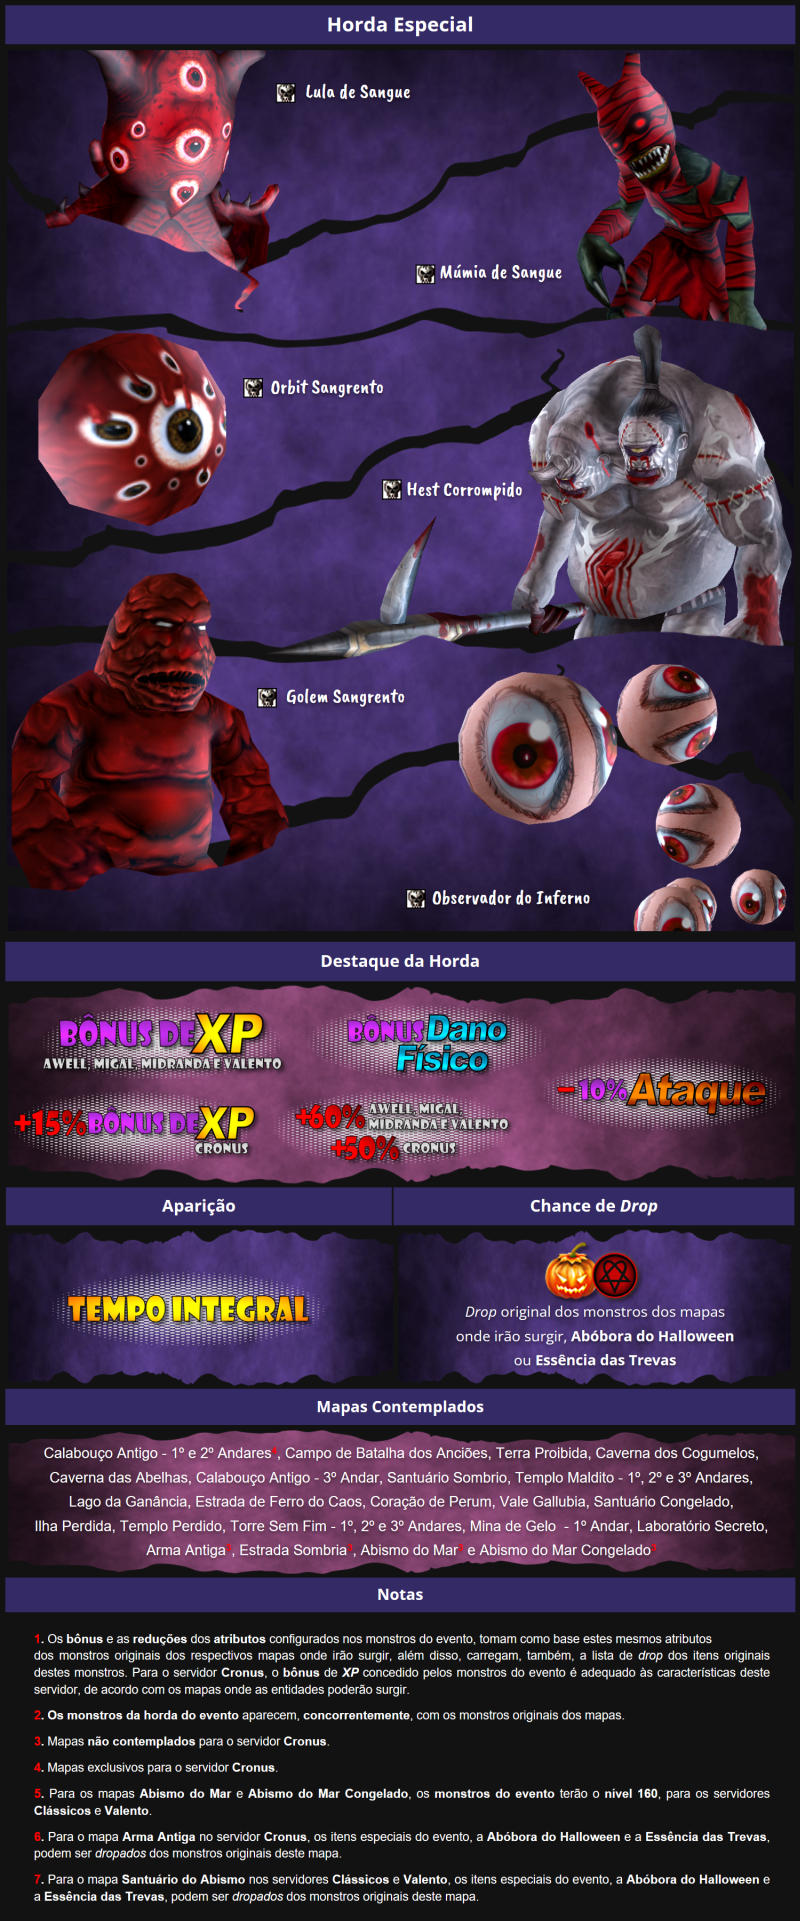 Categoria:Personagens (FNaF:HW), Five Nights at Freddy's Wiki